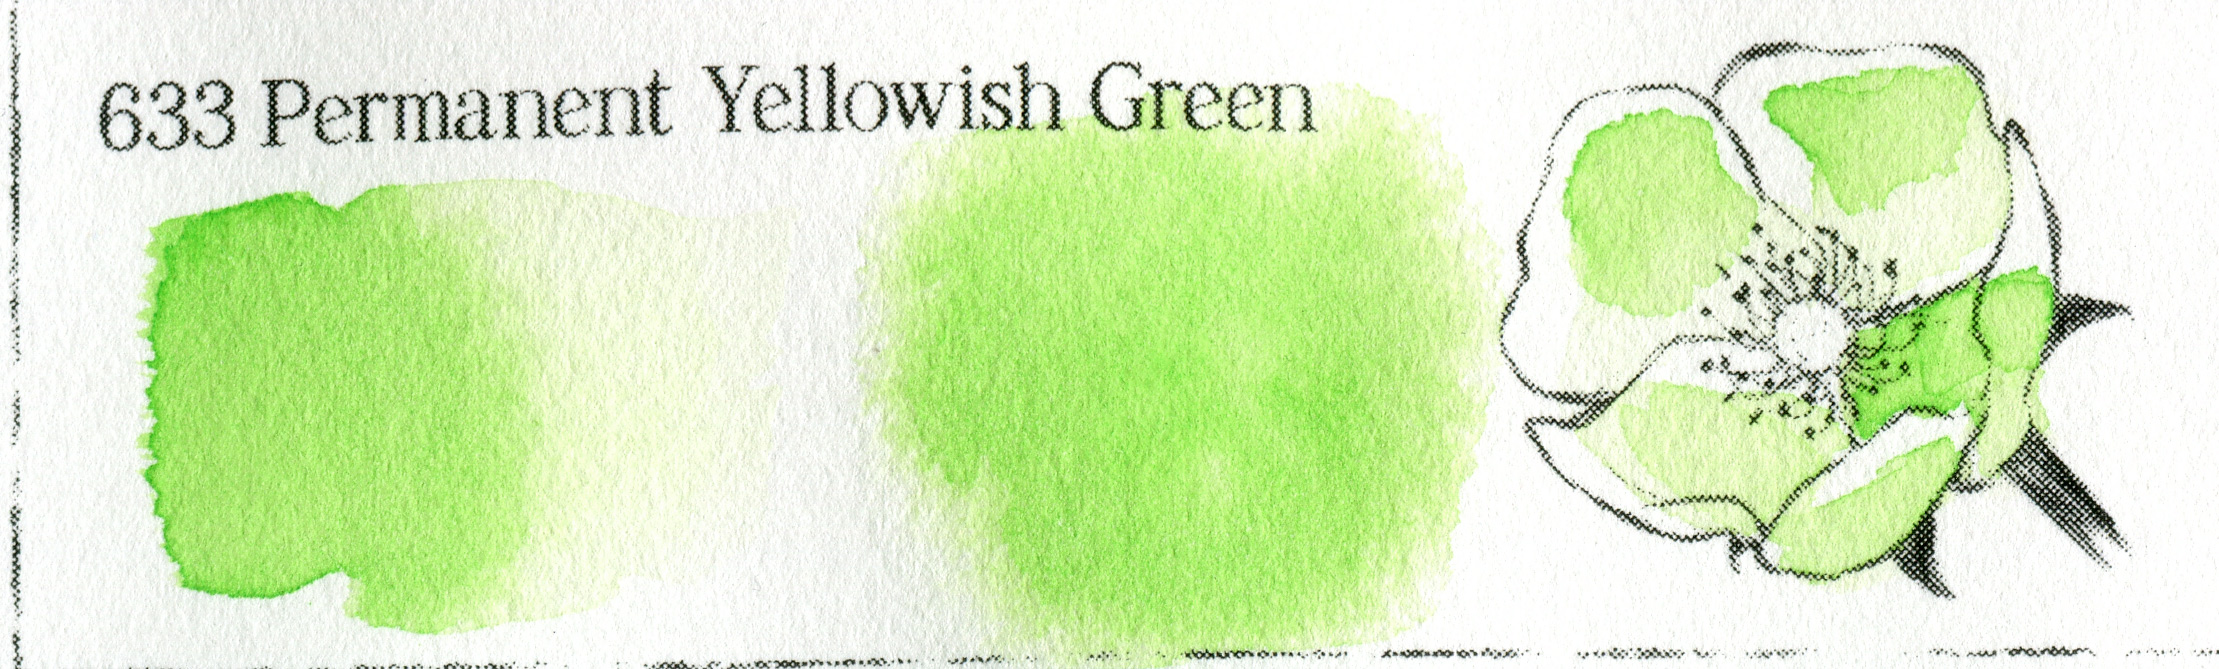 633 Permanent Yellowish Green